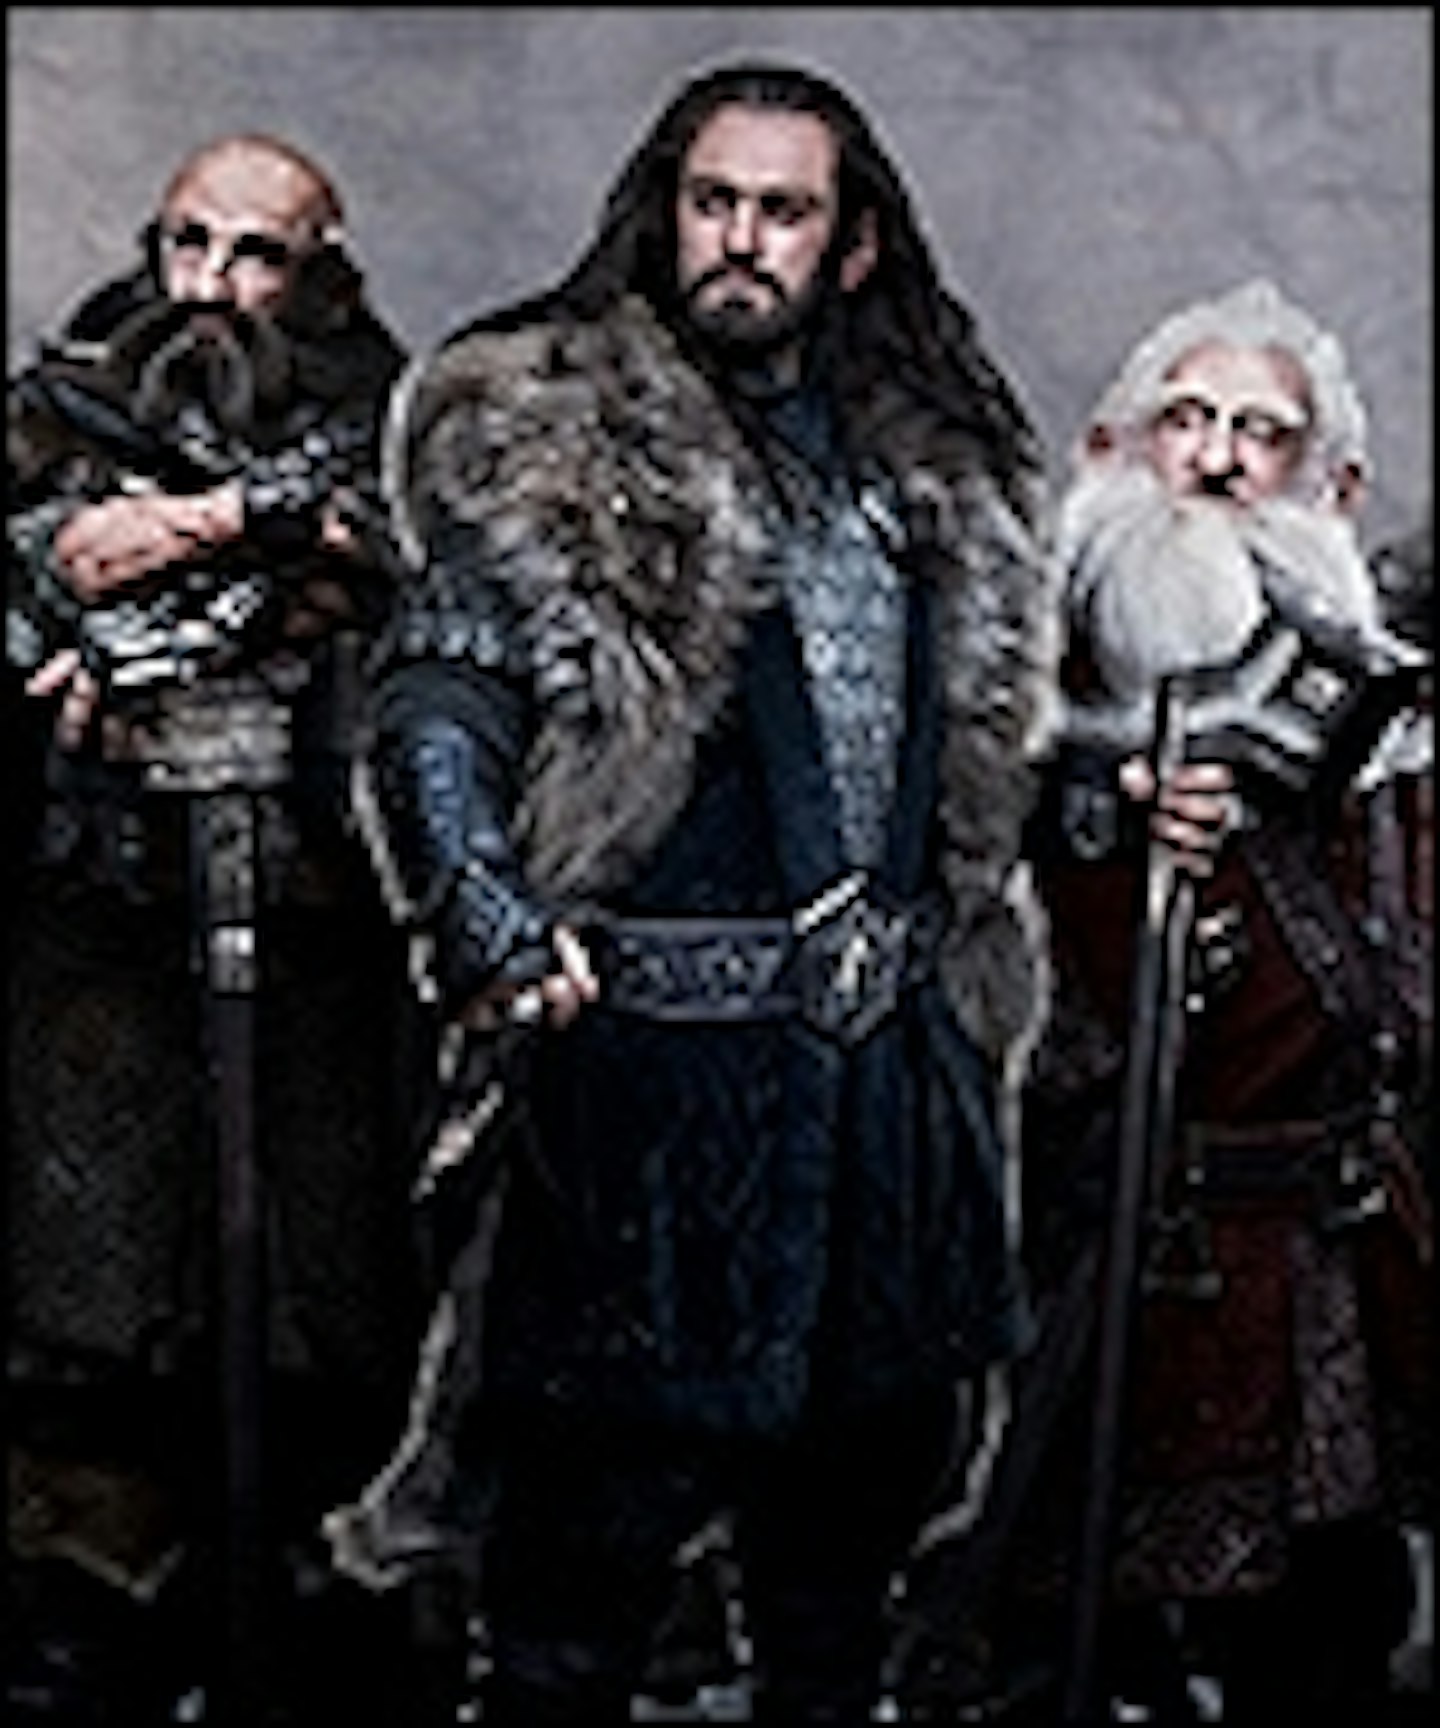 Complete Hobbit Dwarf Line-Up Pictured